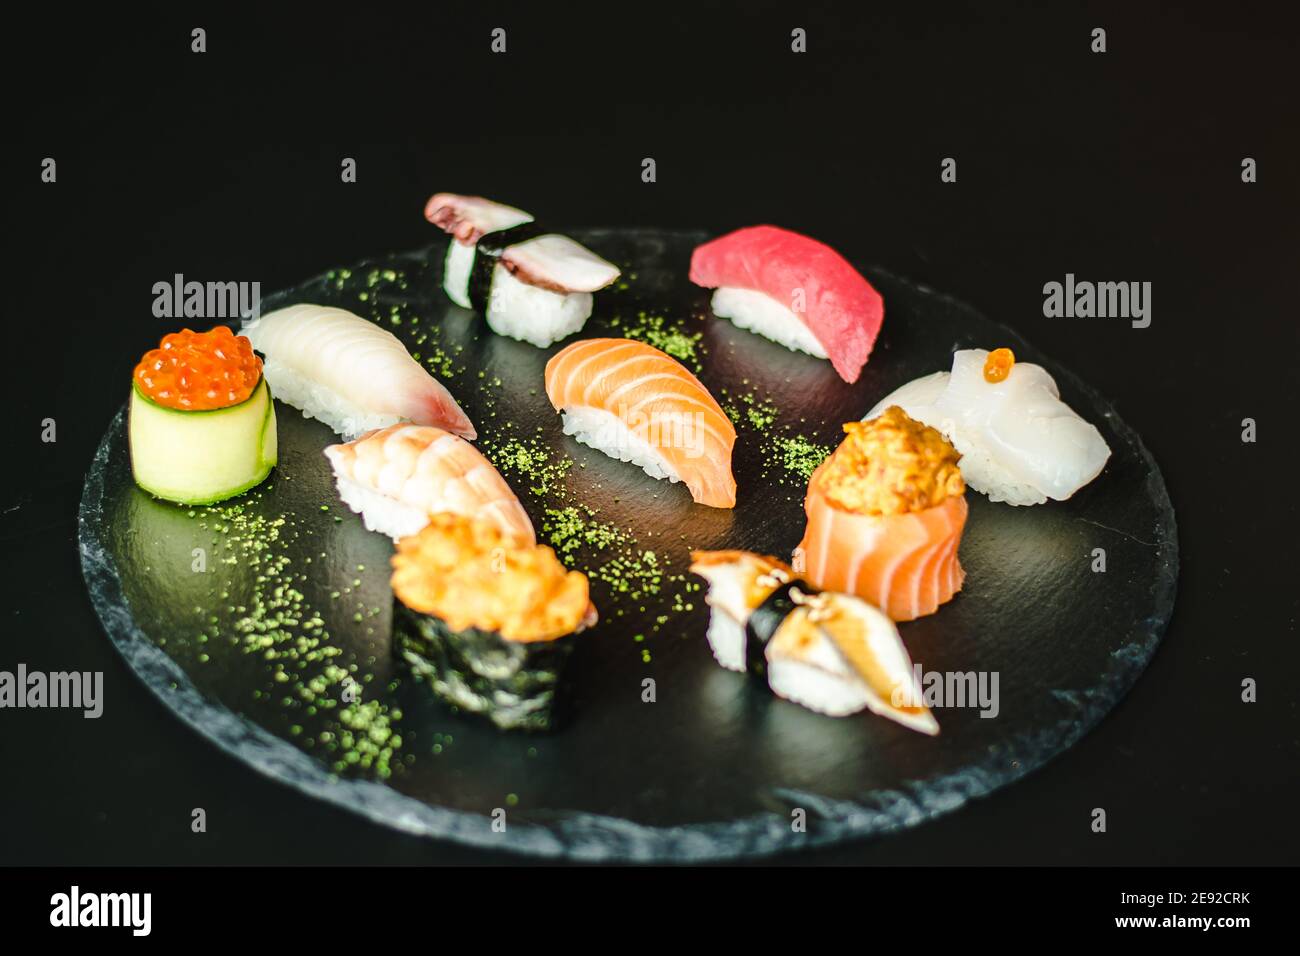 Maki and nigiri sushi variety with salmon, shrimp, avocado and tuna at a sushi restaurant Stock Photo